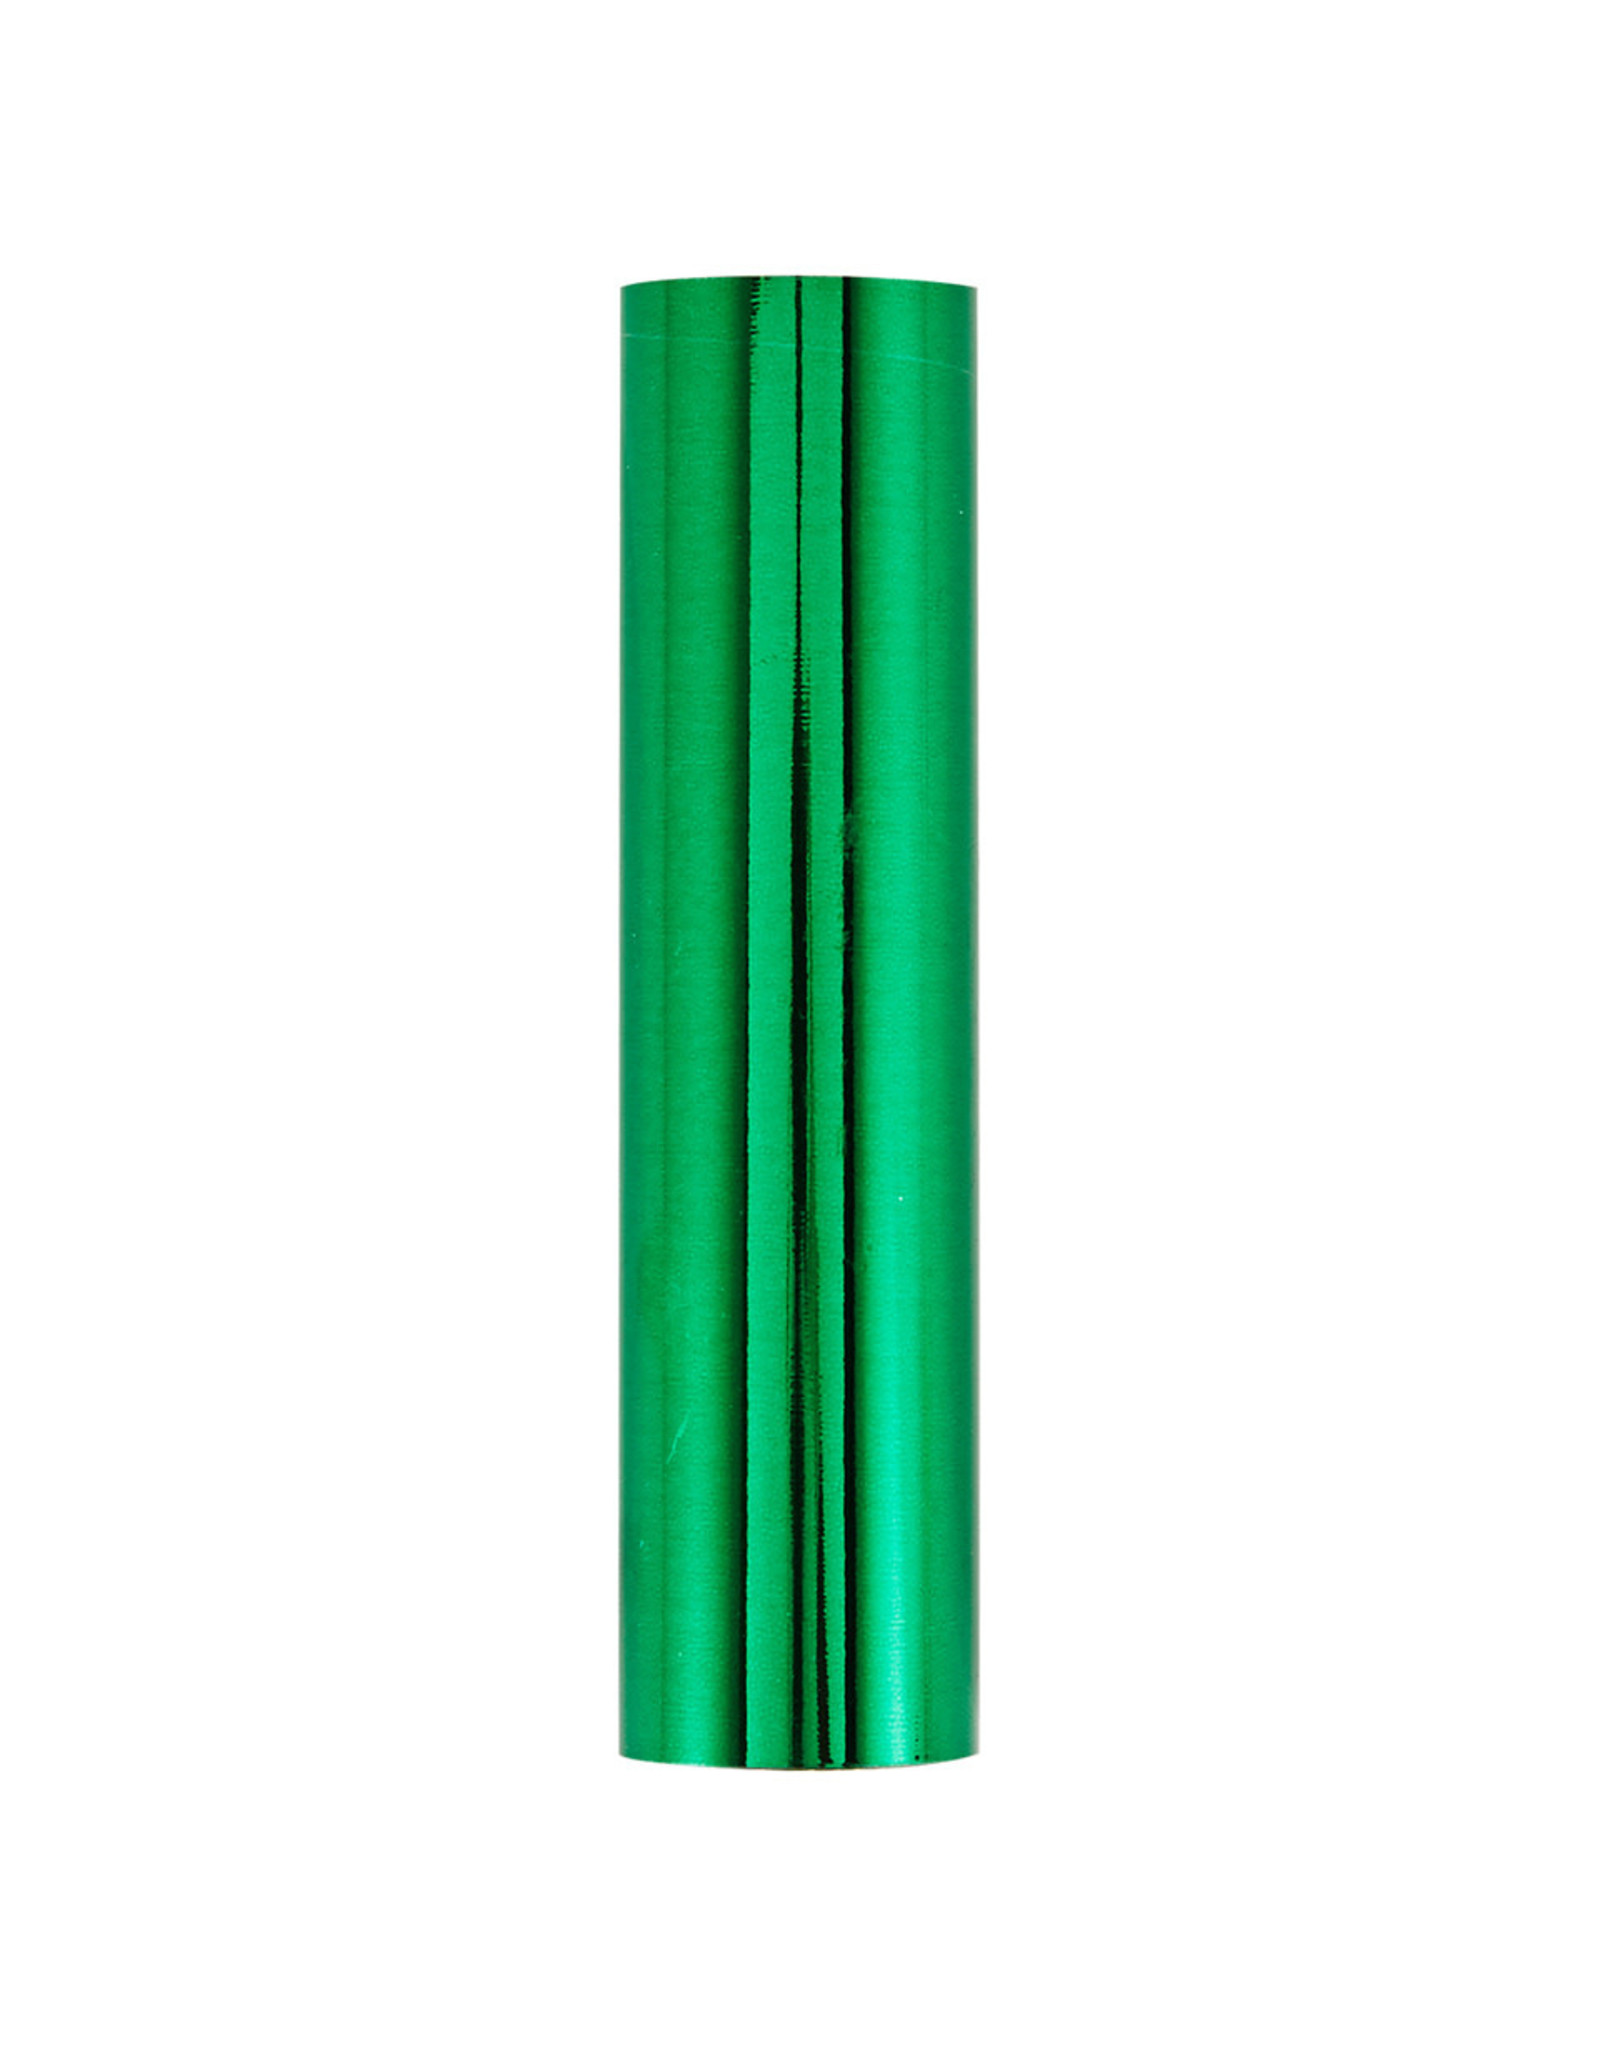 Spellbinders Glimmer Hot Foil - Viridian Green